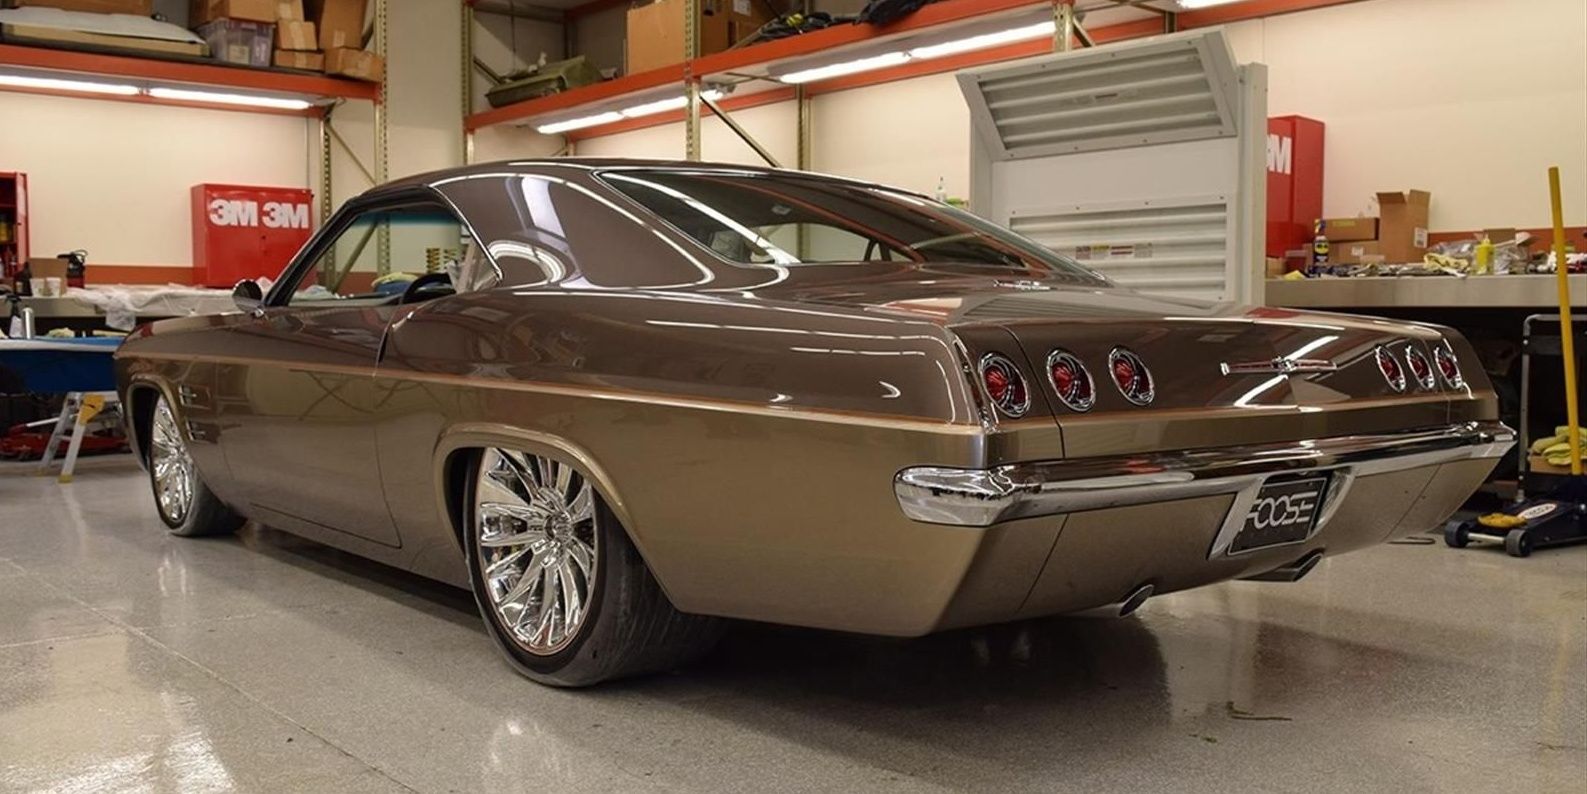 1965 Chevy Impala “Impostor”